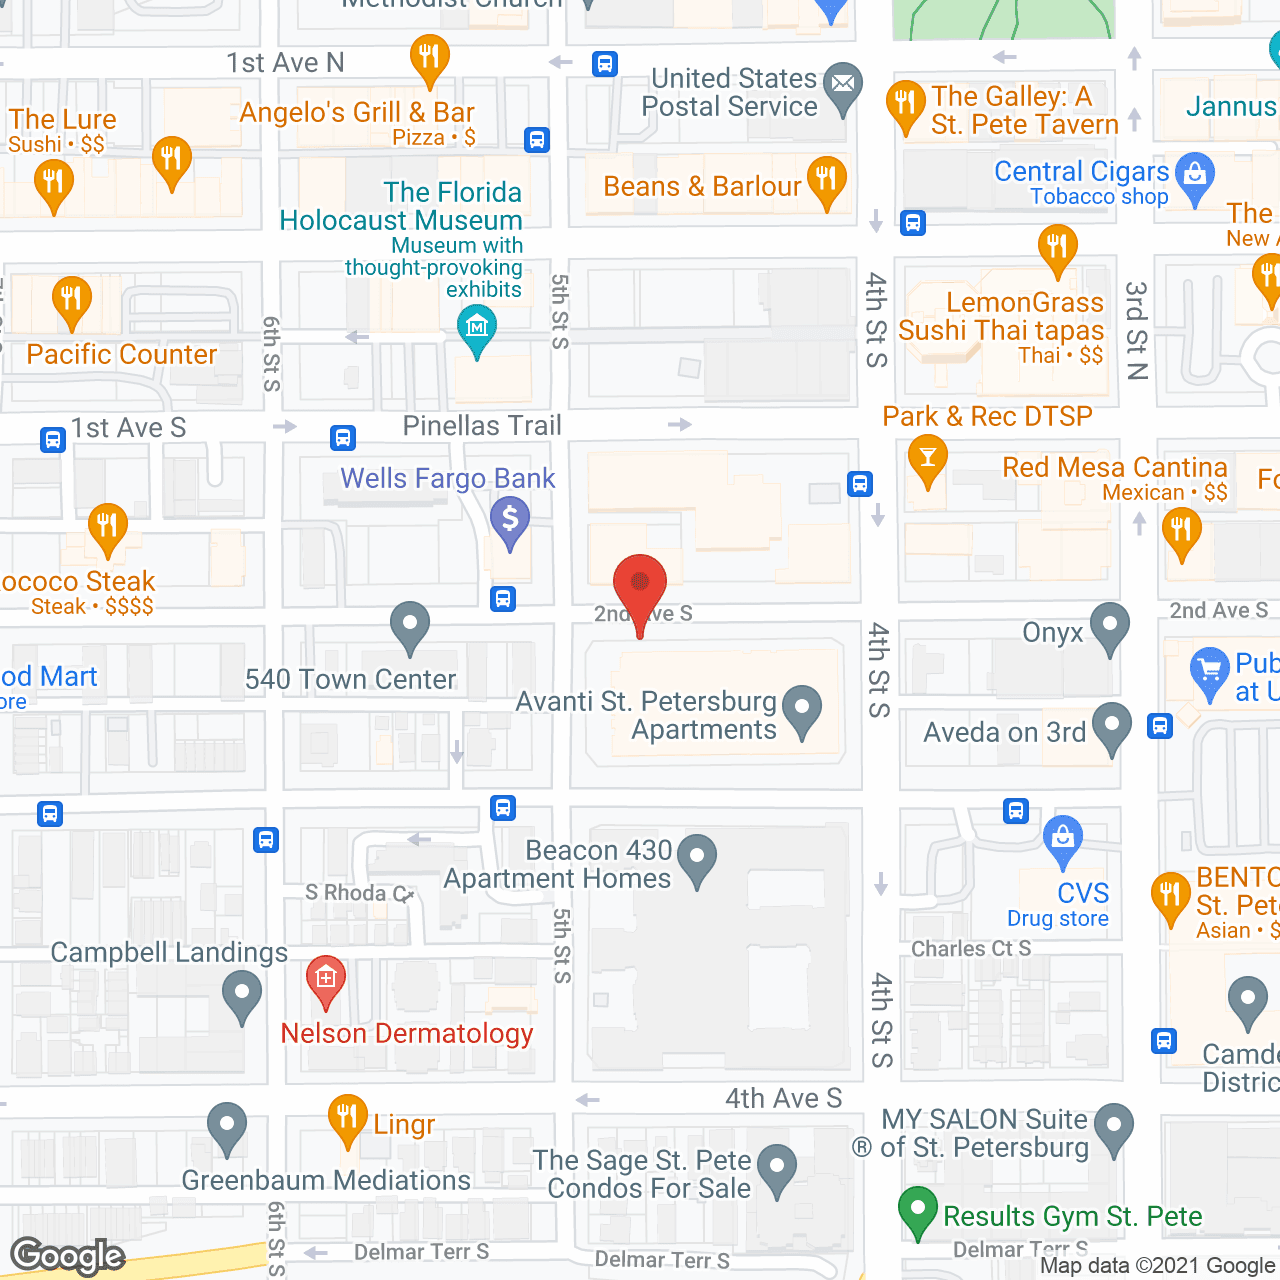 Azalea Manor in google map